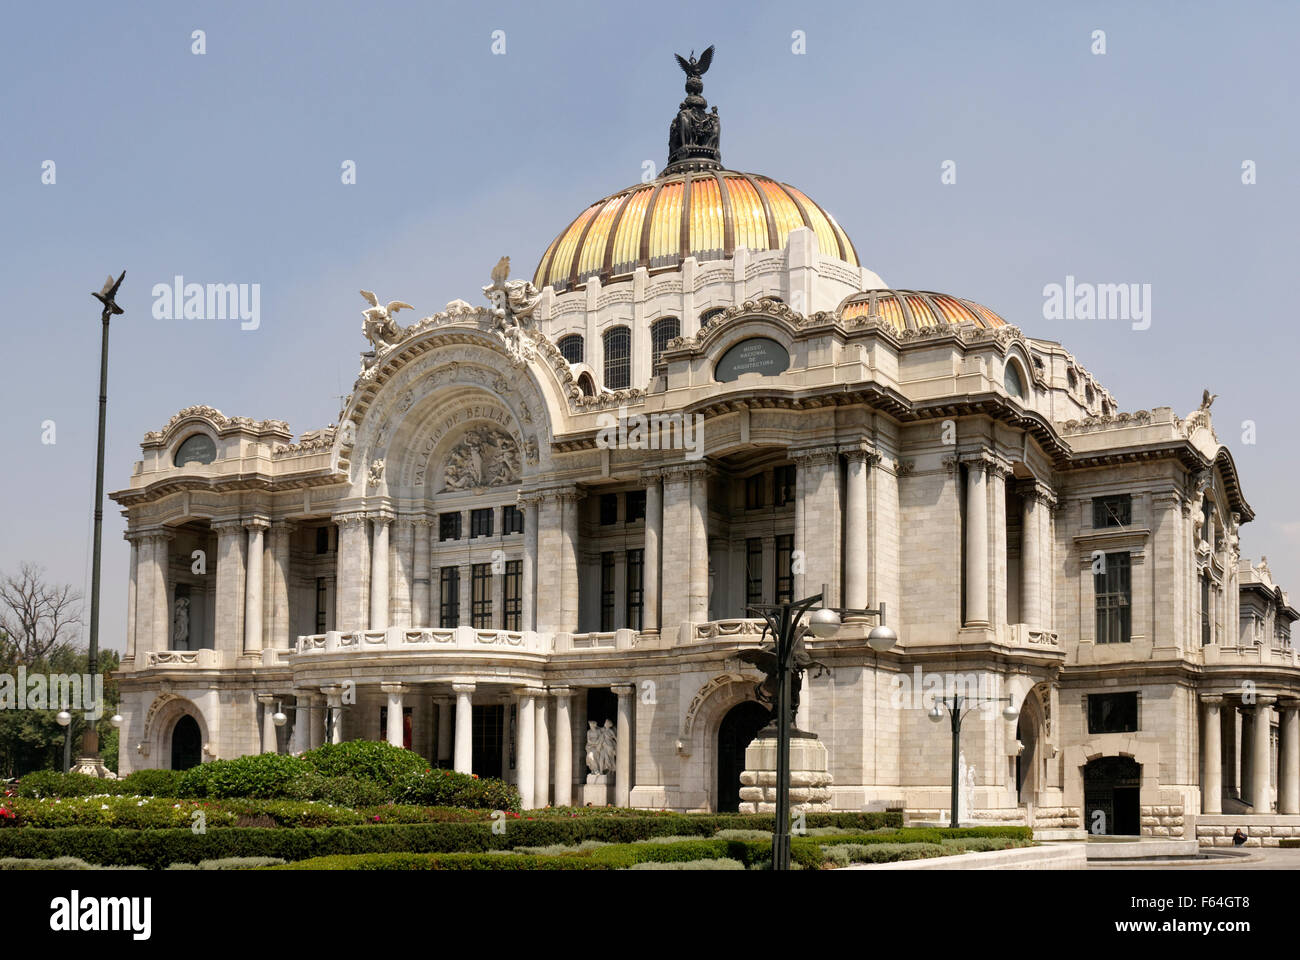 Der Art Nouveau und Art Déco-Palacio de Bellas Artes oder Palast der schönen Künste in Mexico City, Mexiko Stockfoto